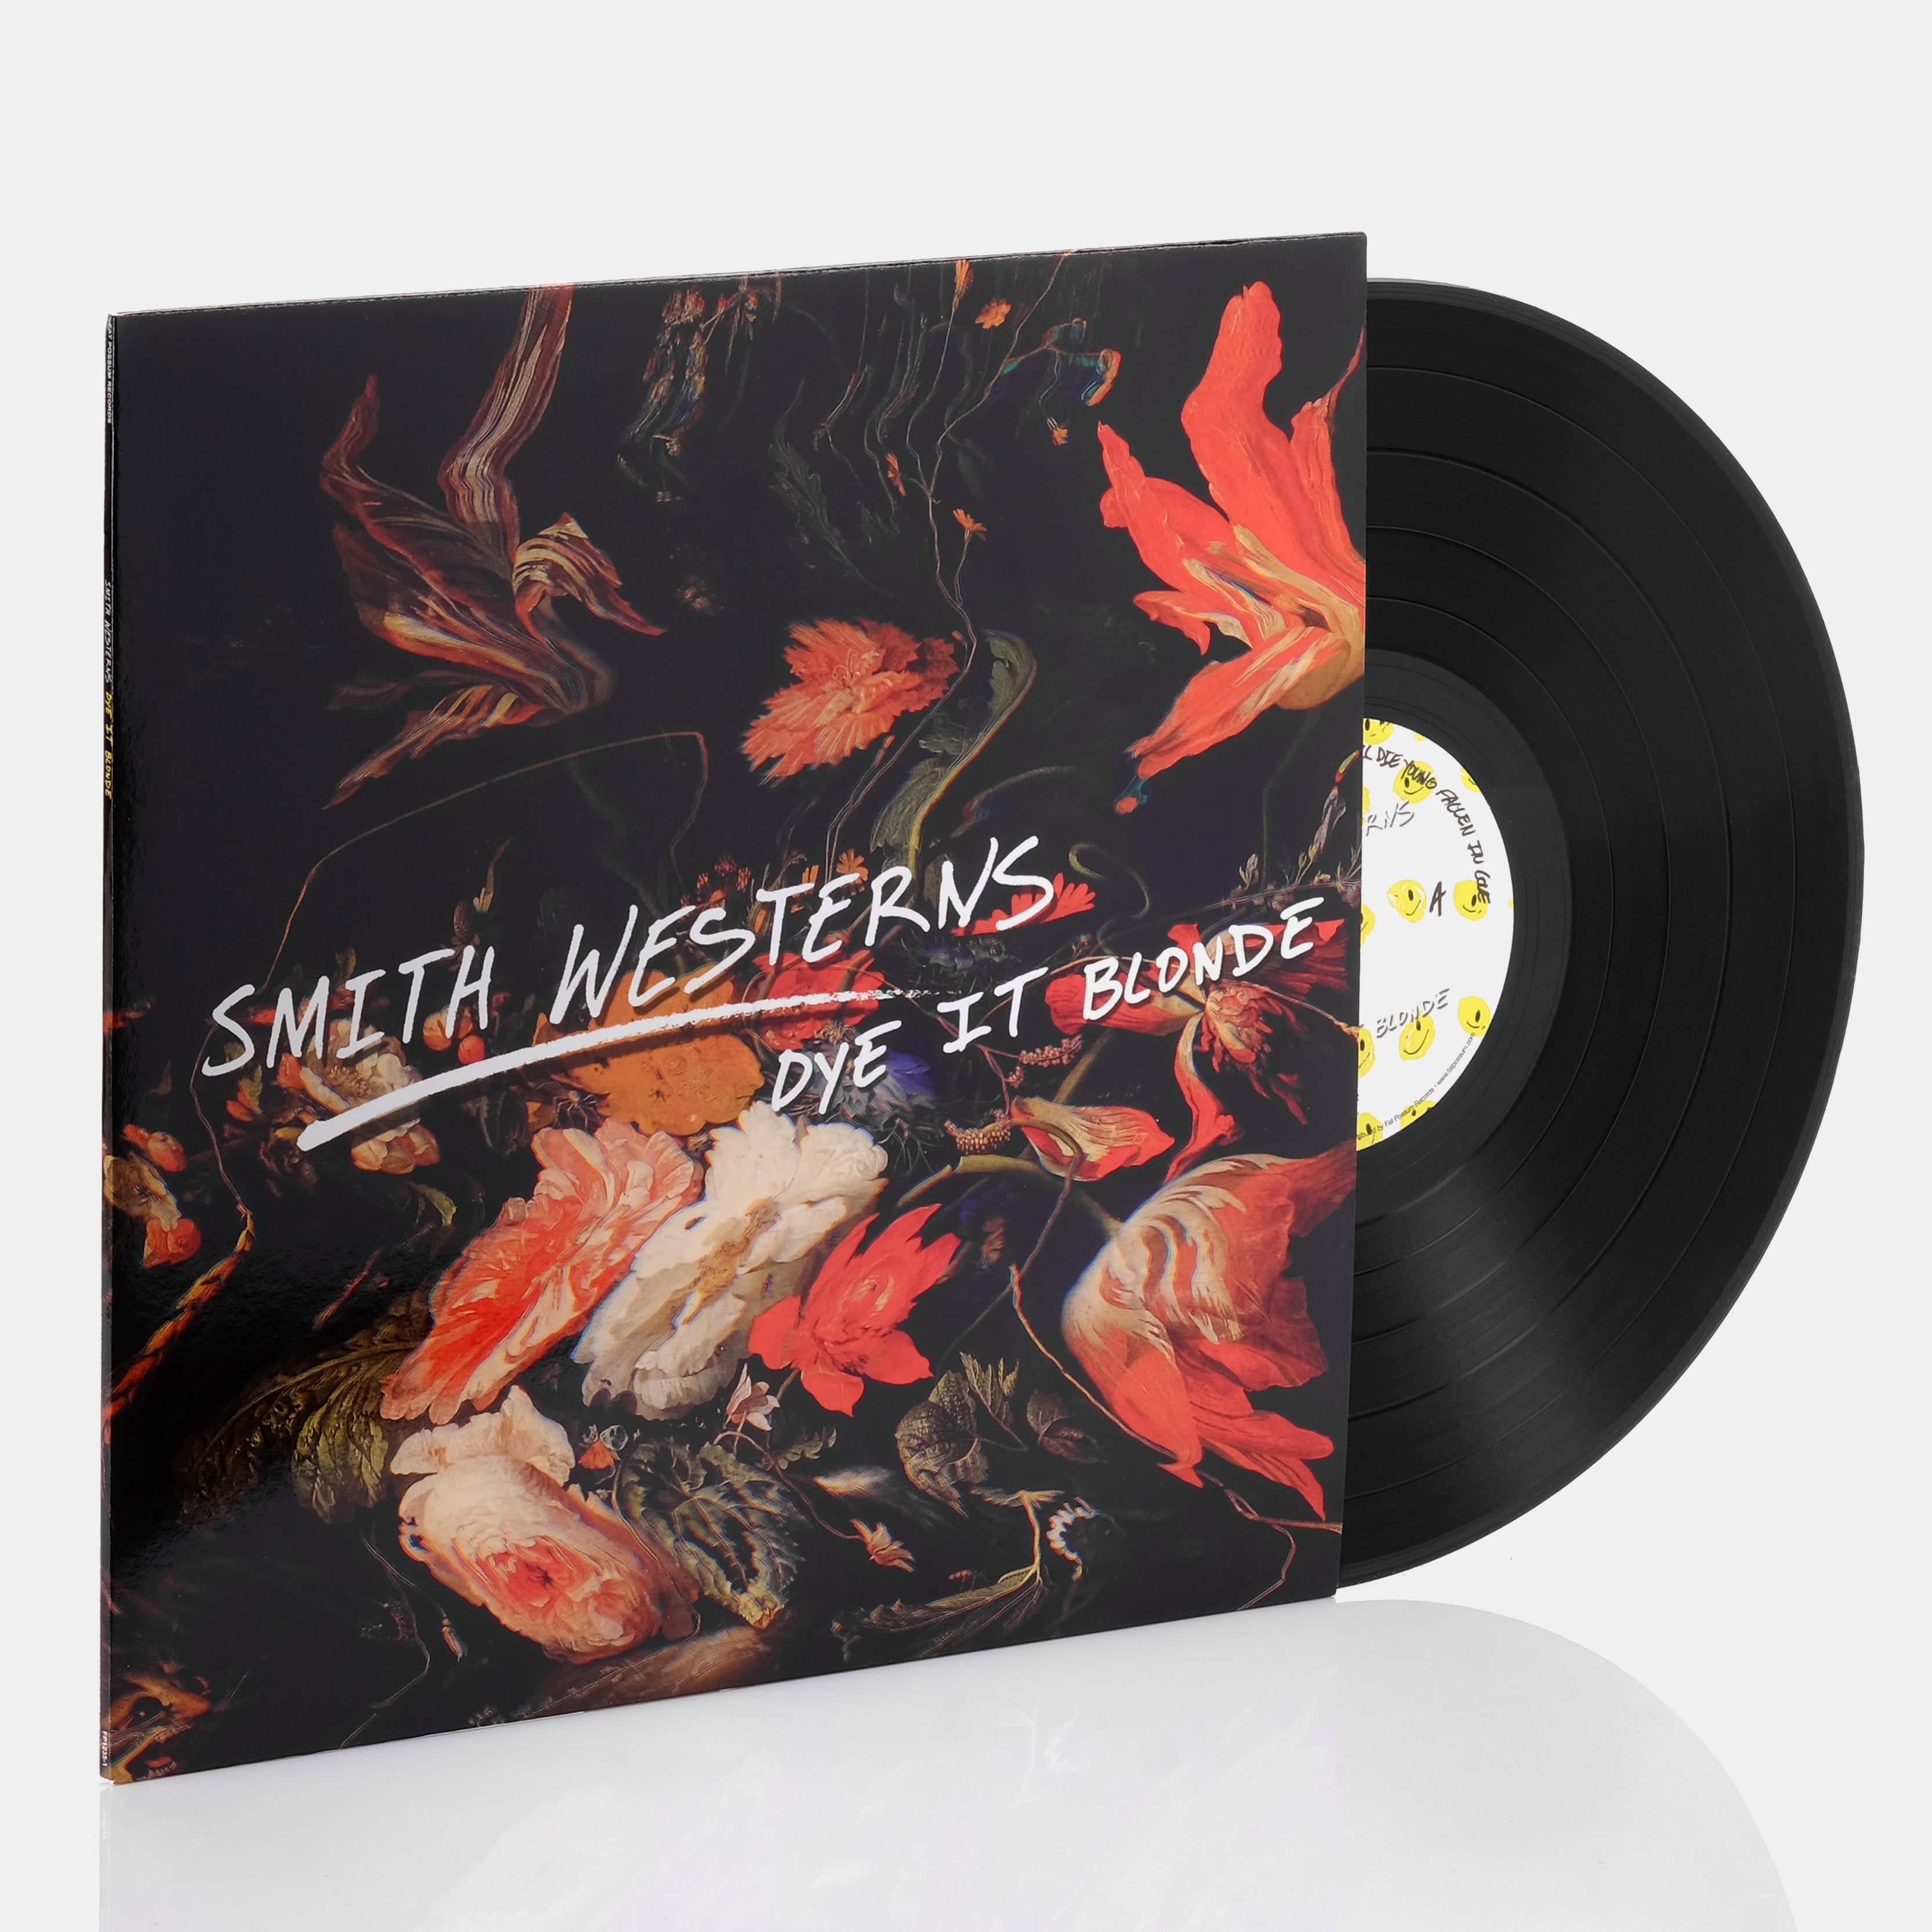 Smith Westerns - Dye It Blonde LP Vinyl Record